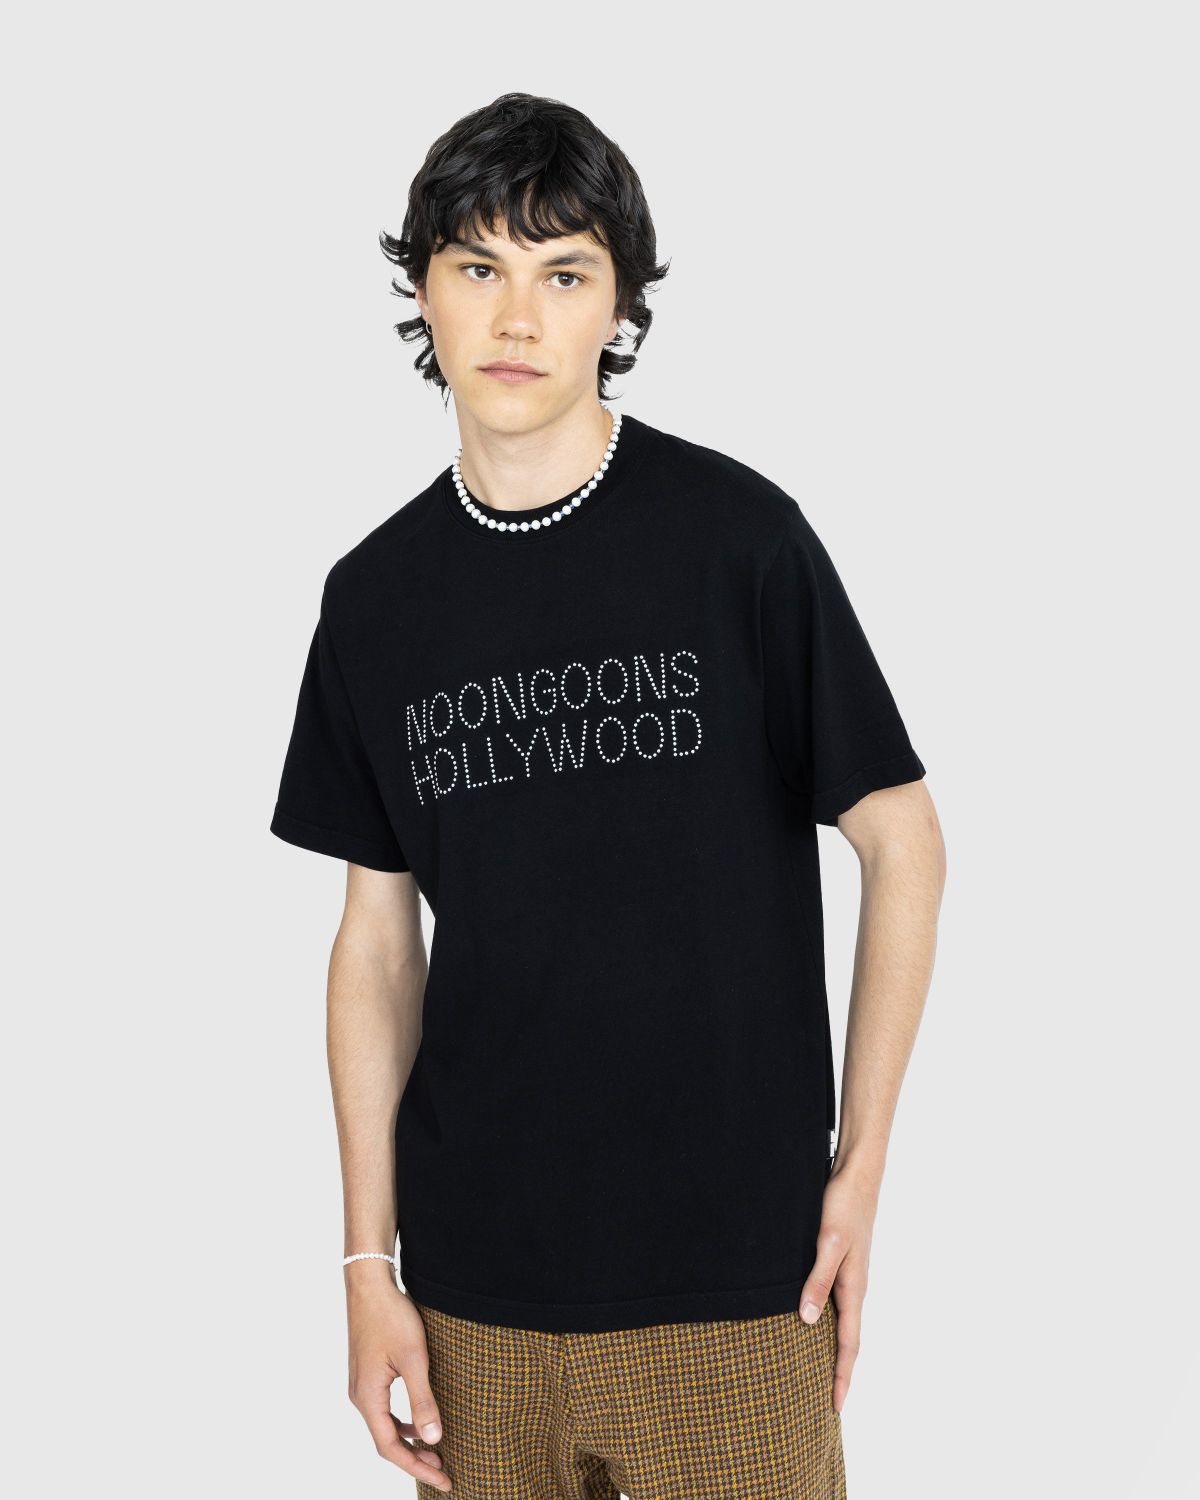 Noon Goons – Hollyweird T-Shirt Black | Highsnobiety Shop